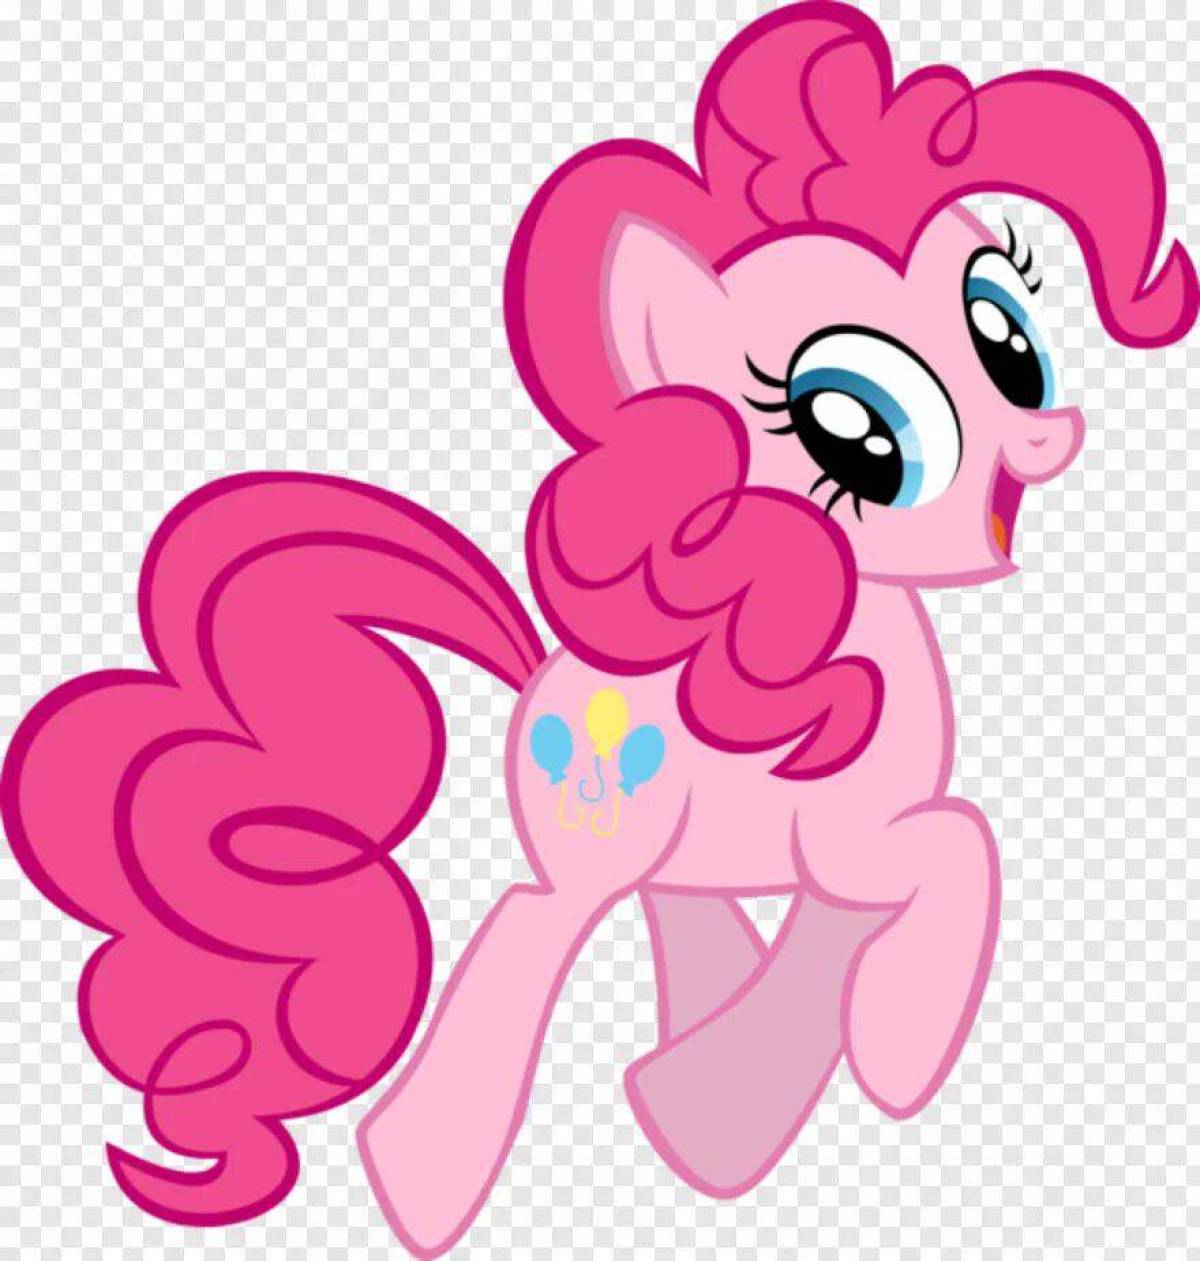 Как зовут розовую пони. Пинки Пай. My little Pony Пинки Пай. My little Pony Дружба это чудо Пинки Пай. Пинки Пай рисунок.